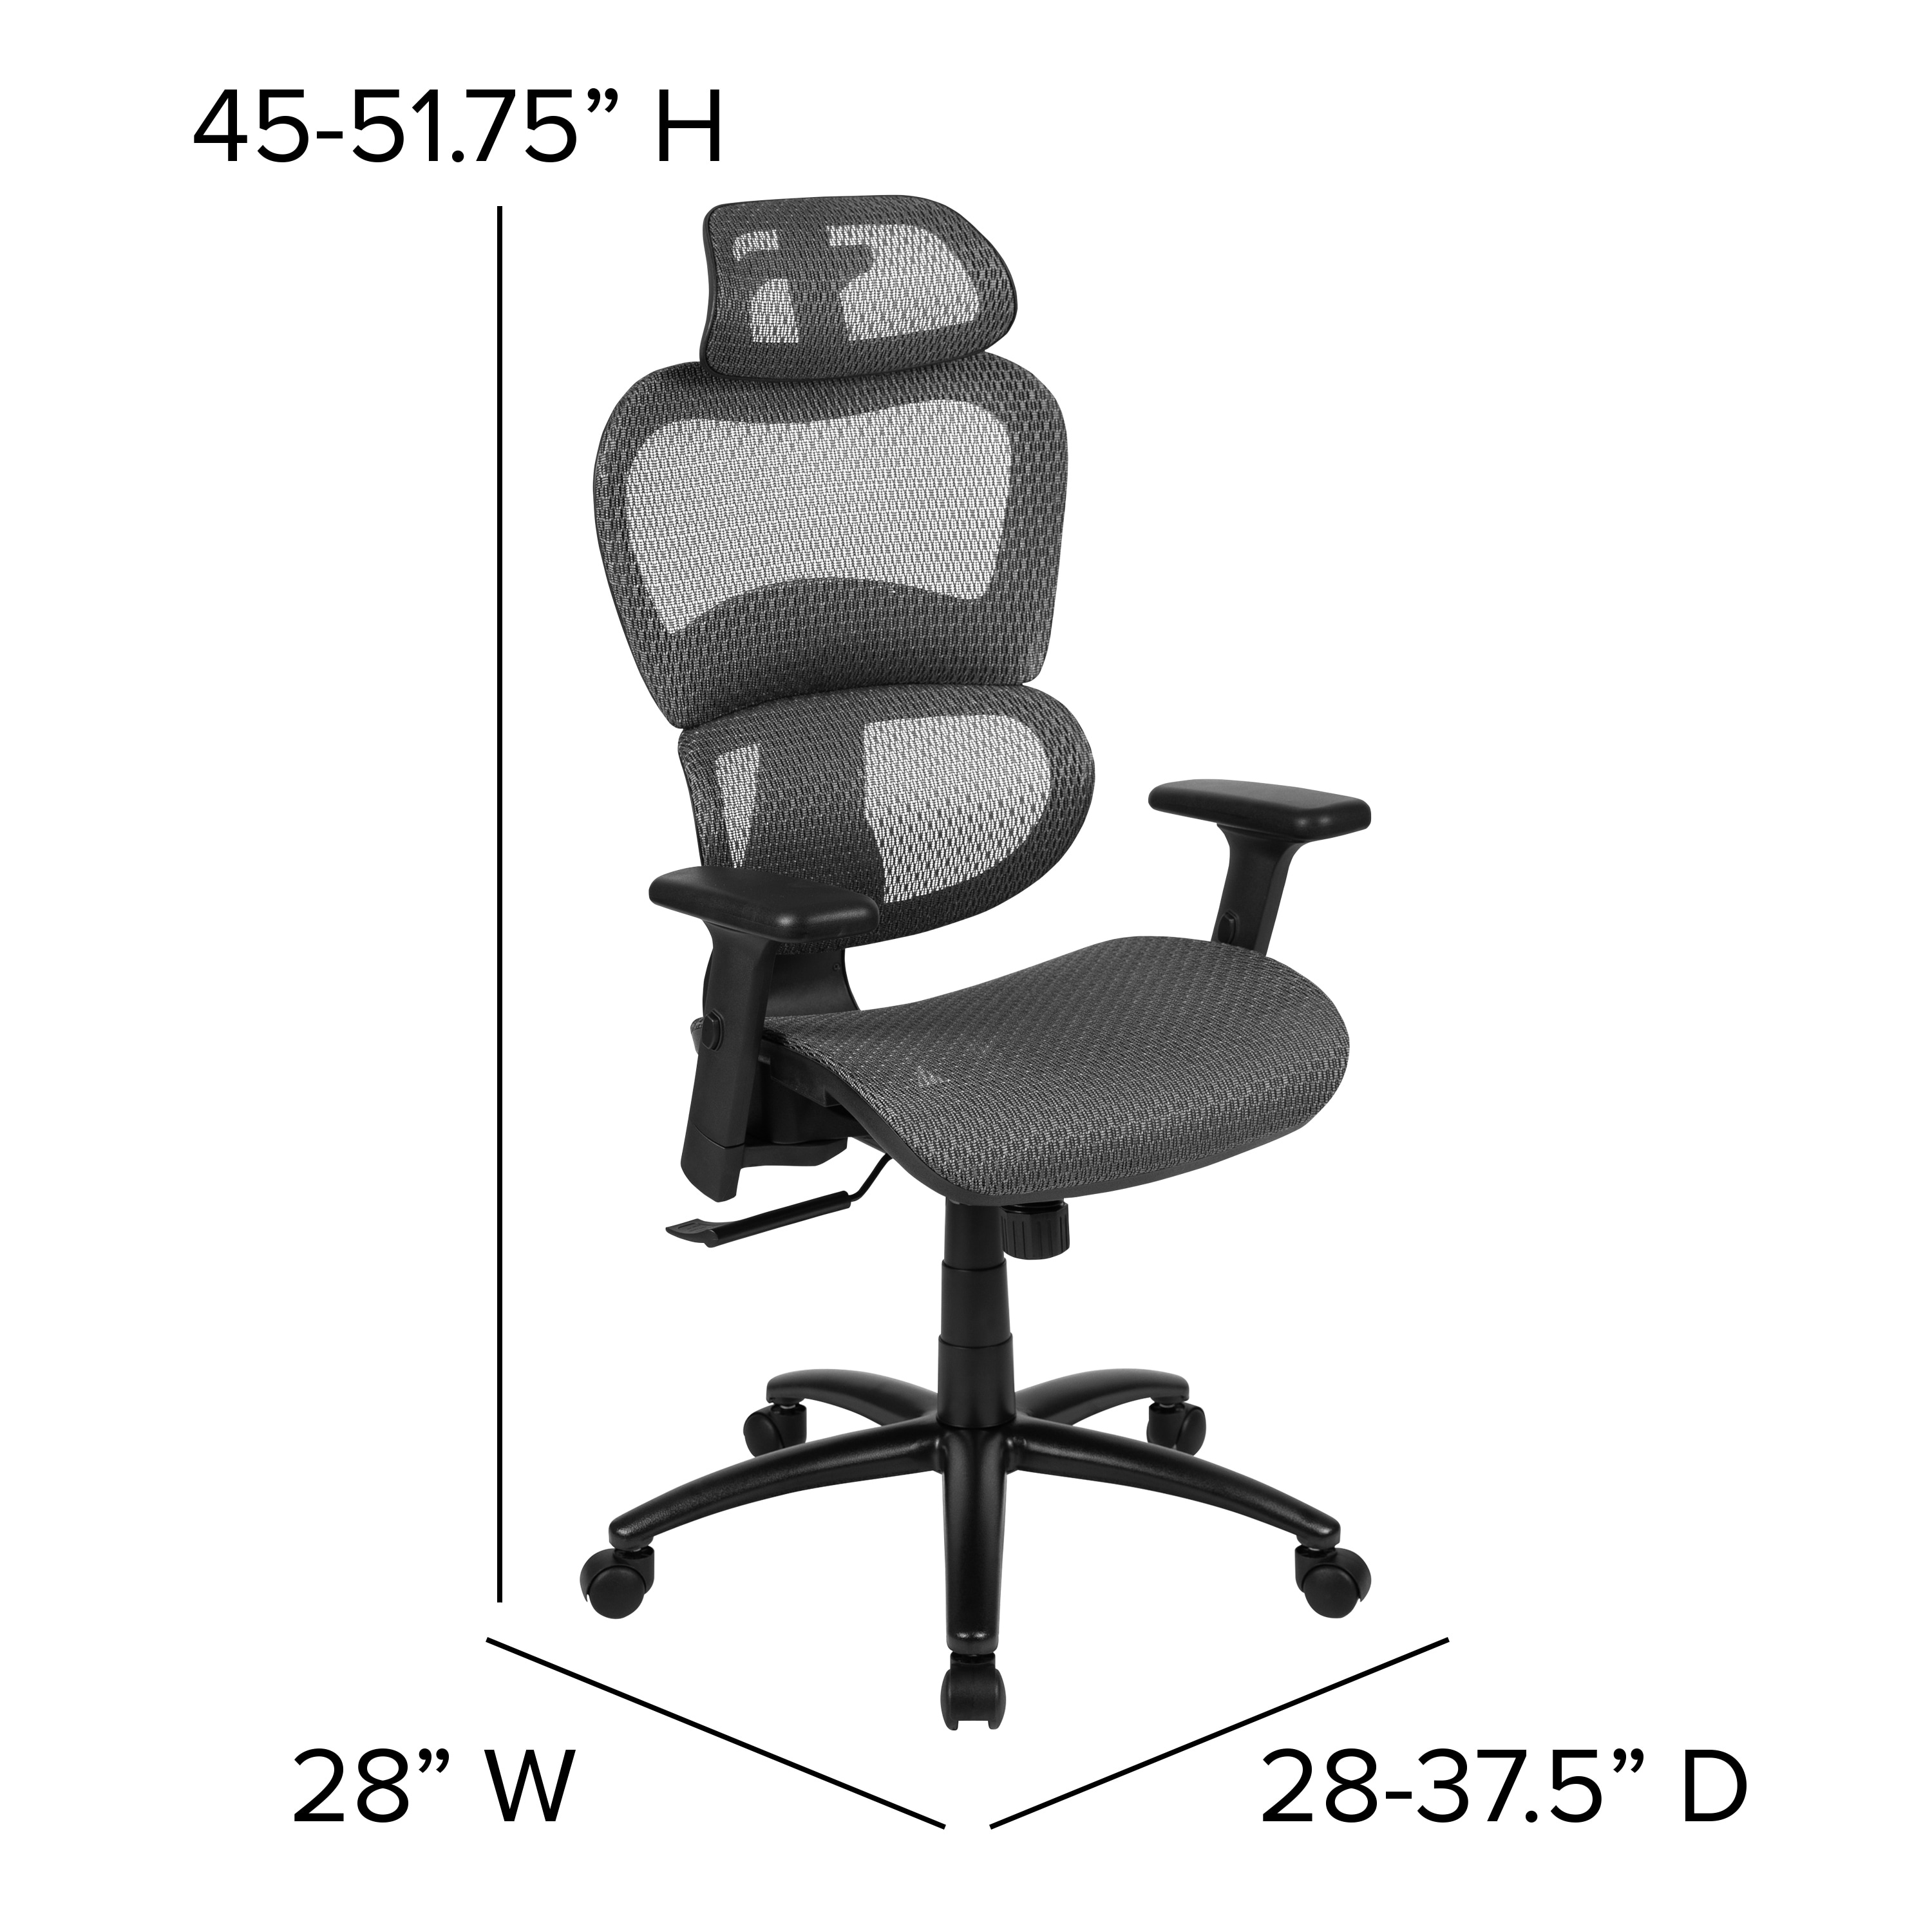 CLATINA Ergonomic Mesh Office Chair Tilt Function,2D Adjustable Lumbar Support and Wheels Black Adjustable Headrest with Adjustable Arm Rest Swivel Computer Task Chair High Back Desk Chair